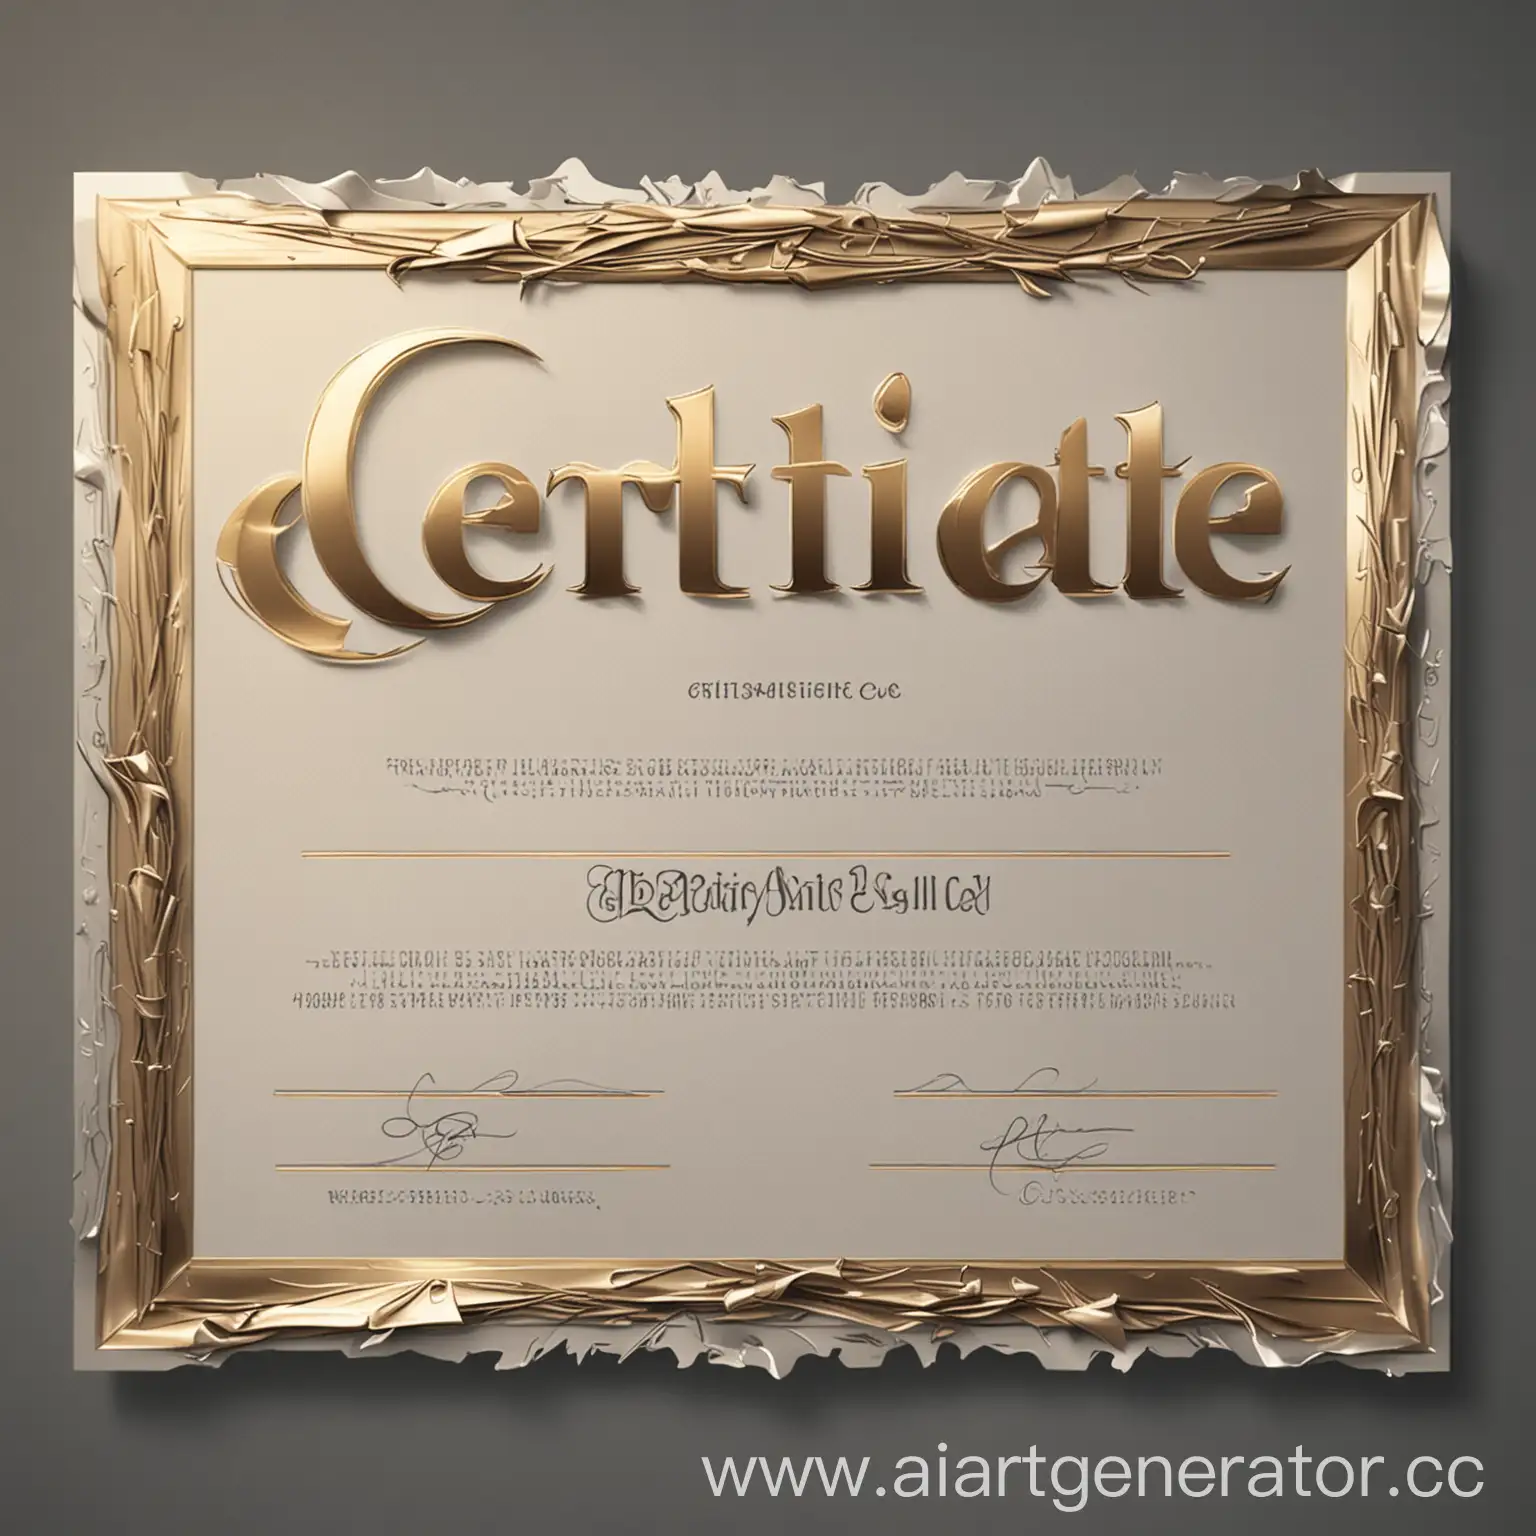 металлическим шрифтом написано certificate from